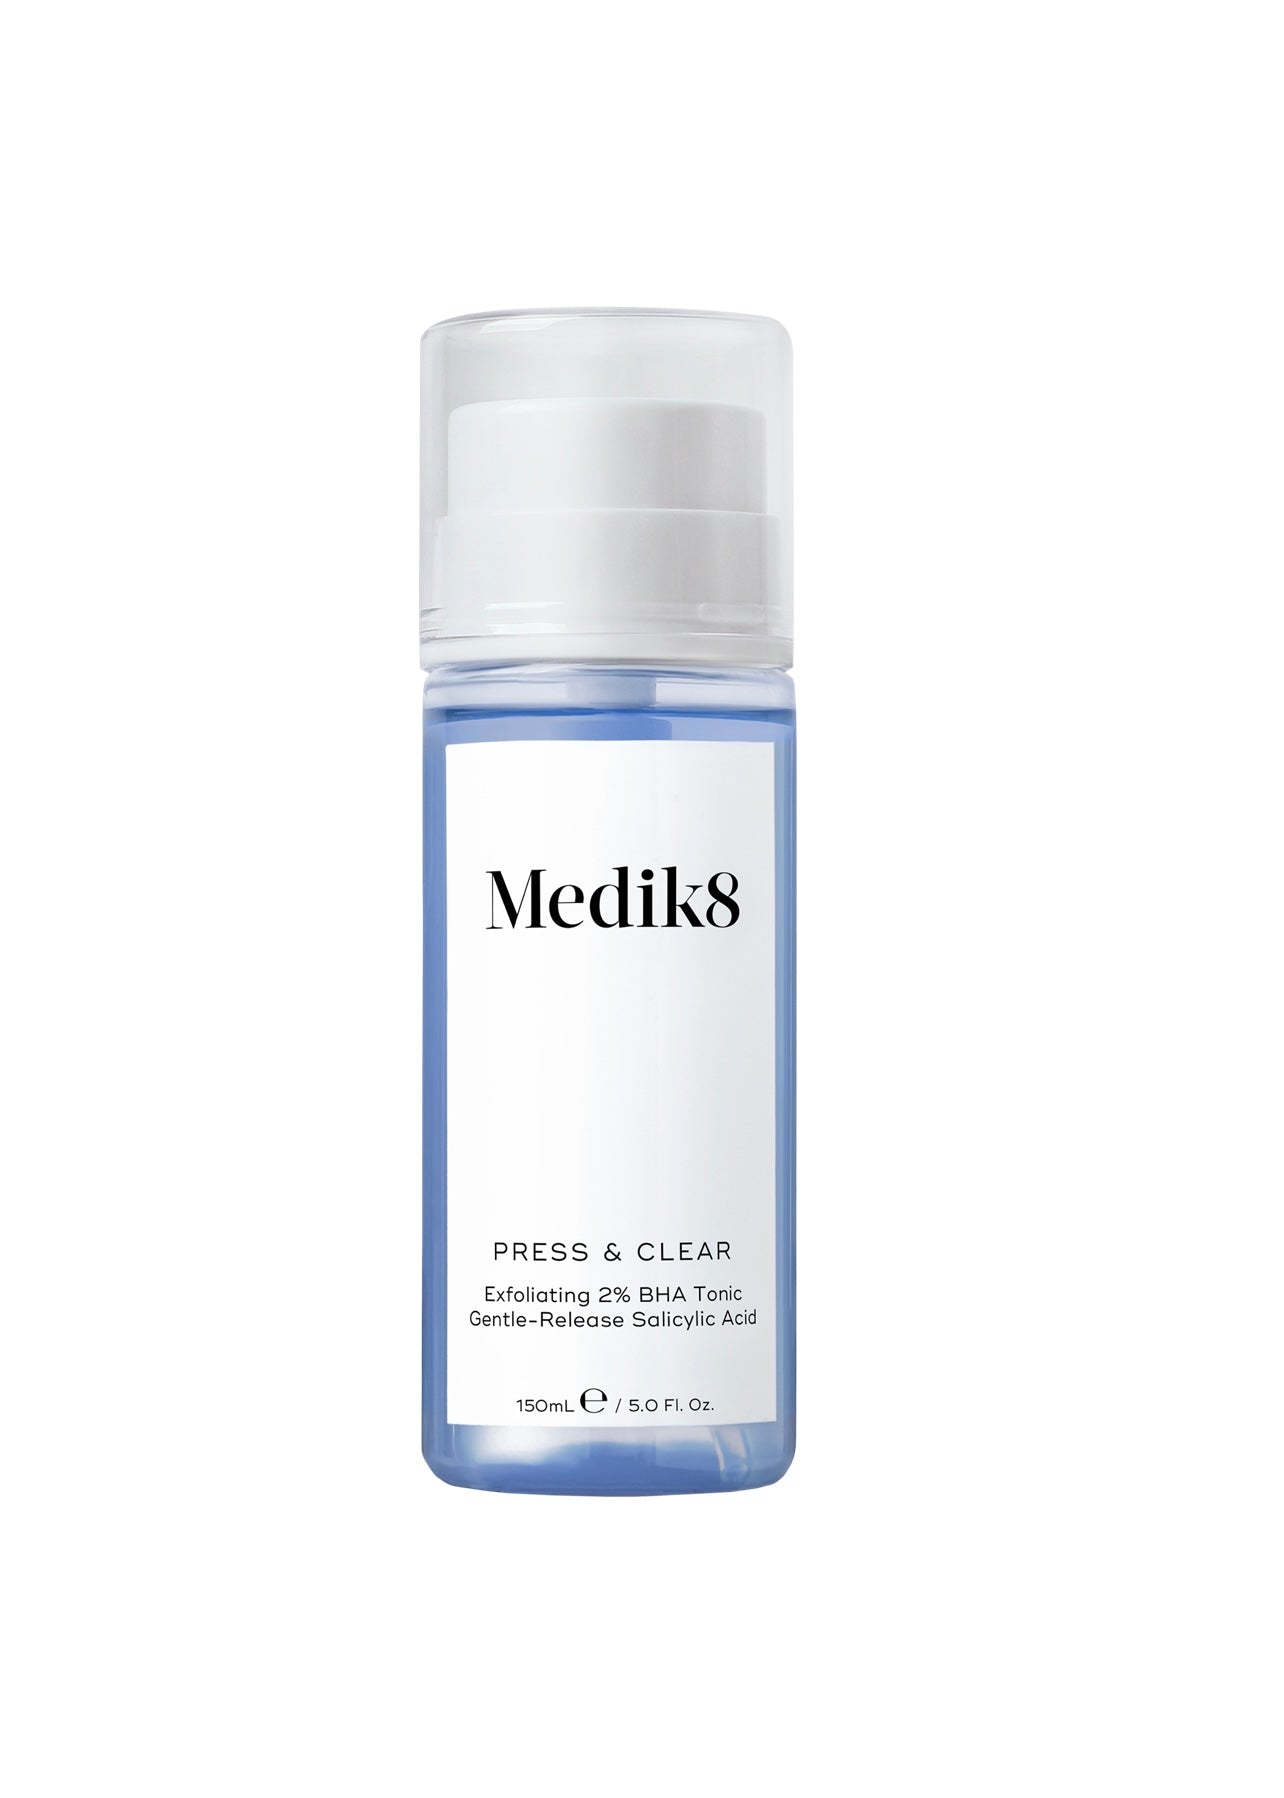 Medik8 Press & Clear Exfoliating 2% BHA Tonic Gentle-Release Salicylic Acid 150ml